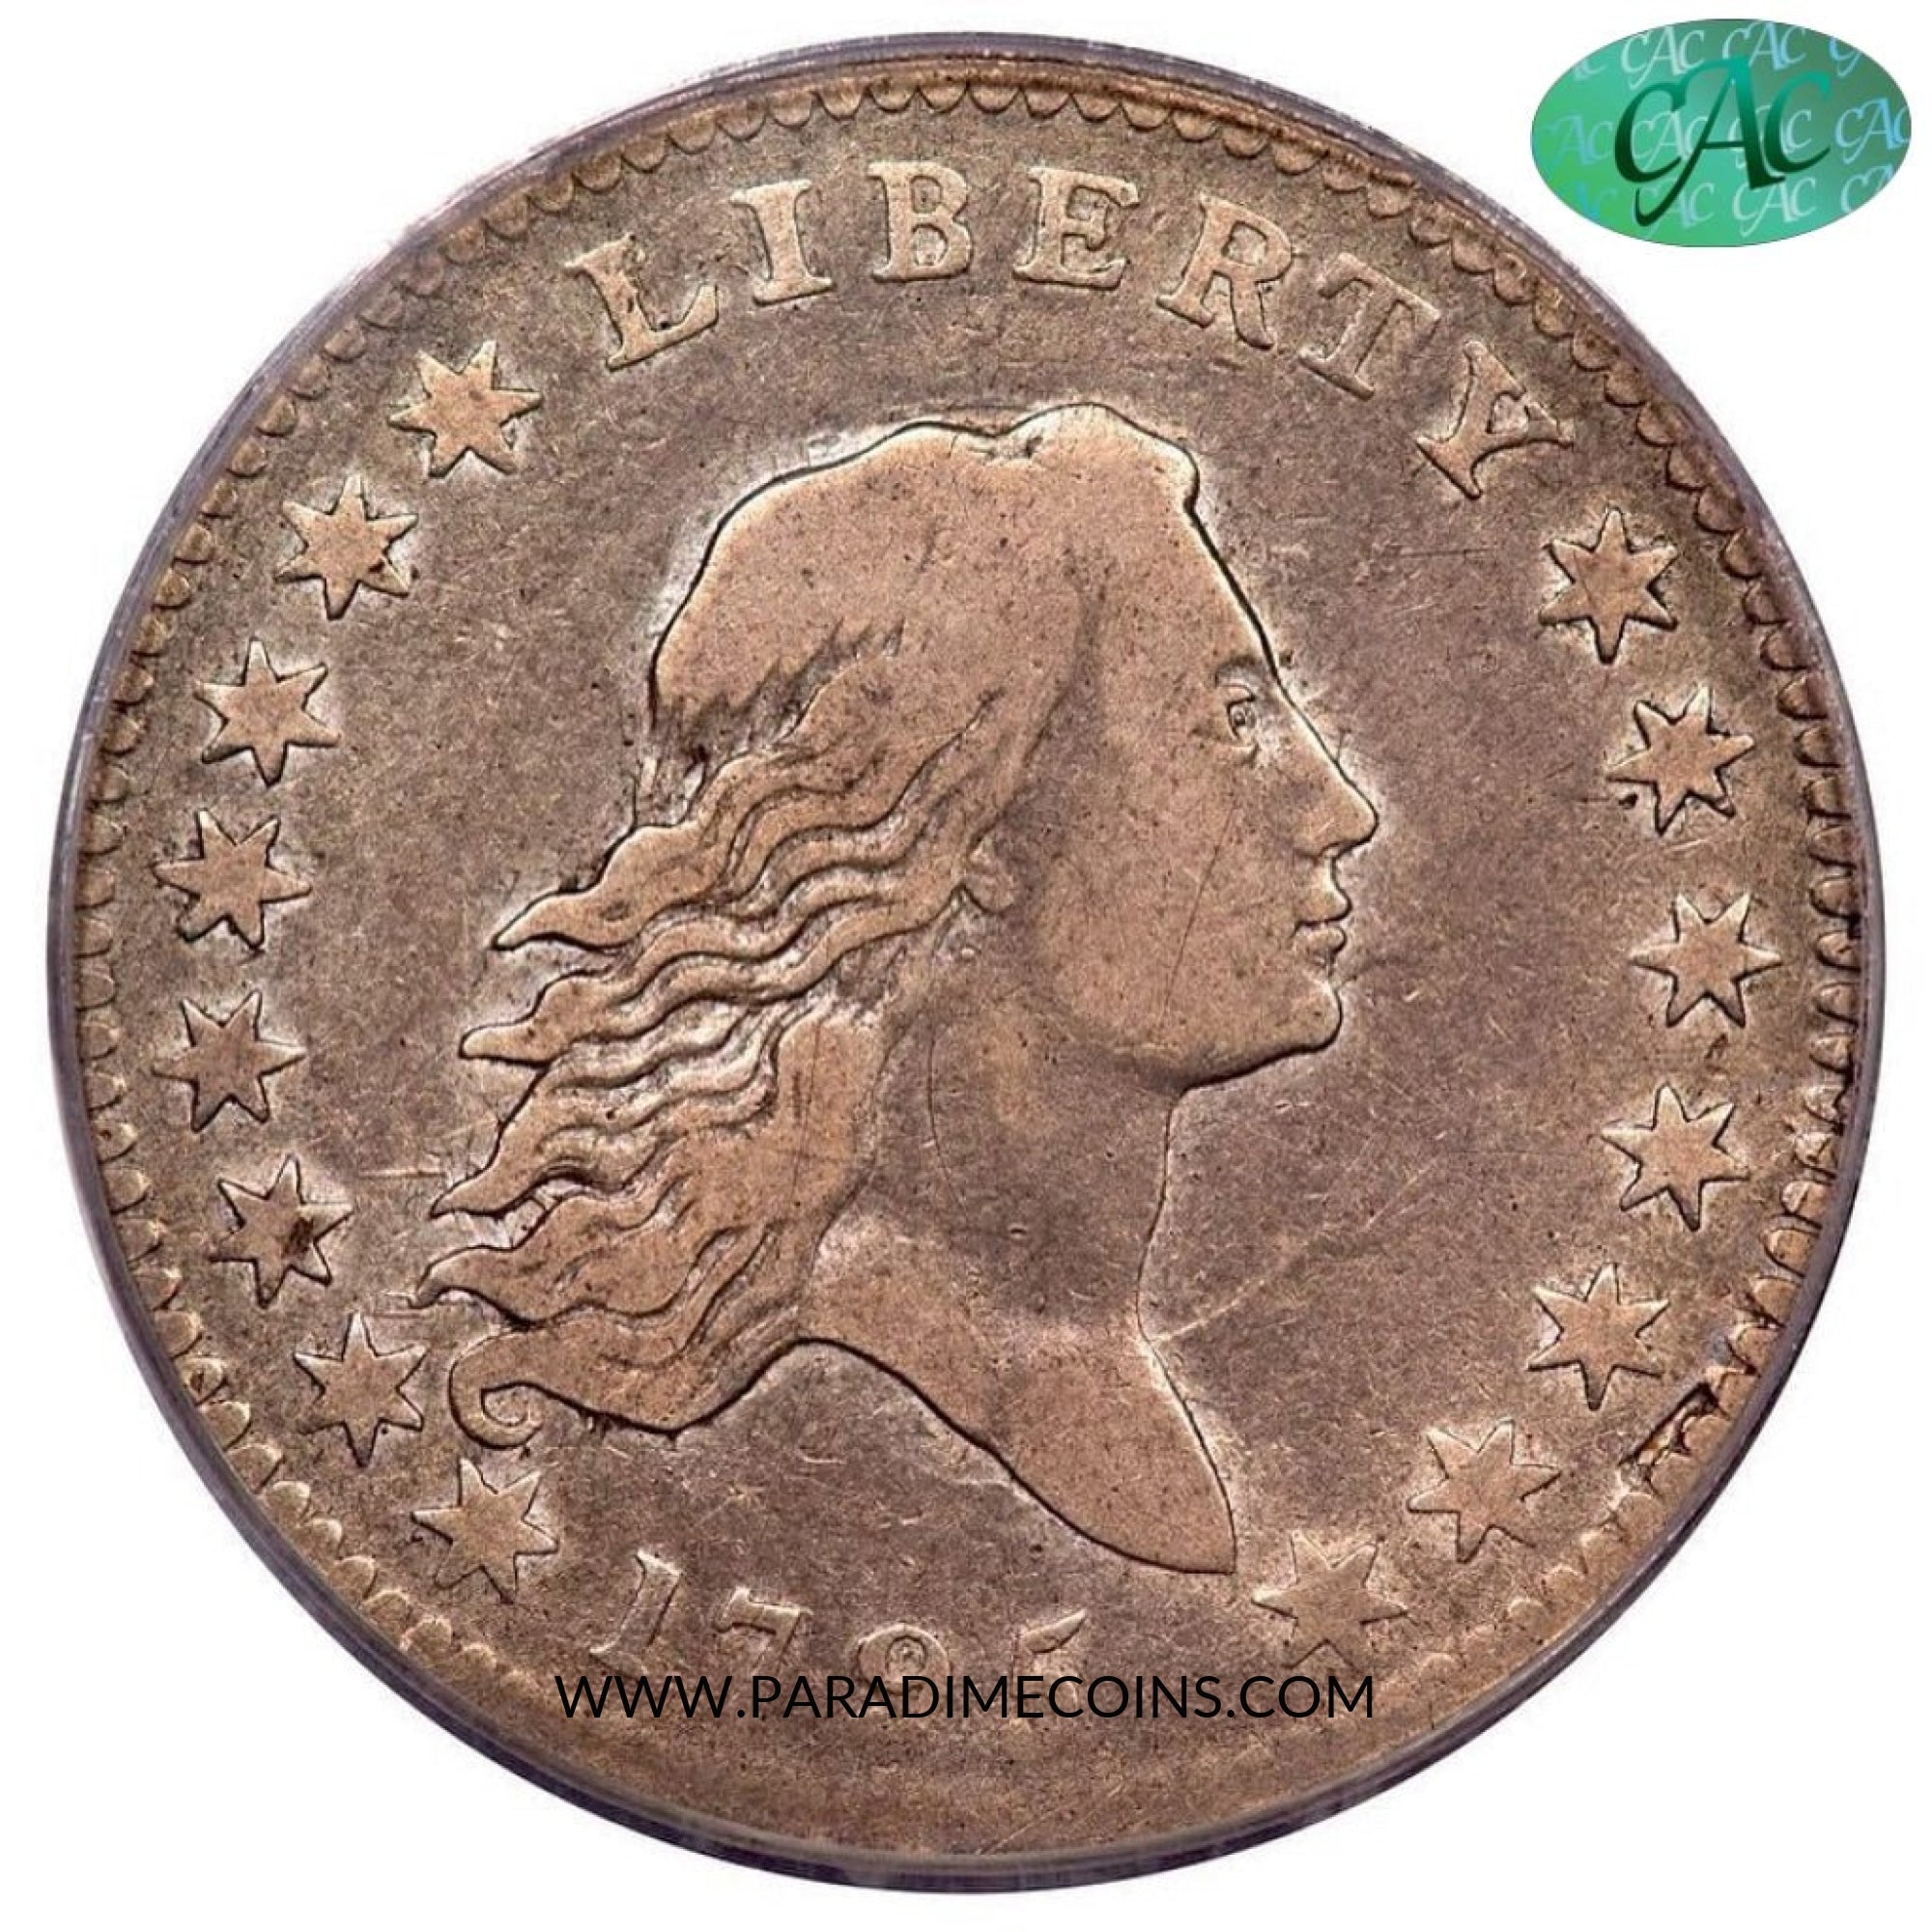 1795 50C VF20 PCGS CAC - Paradime Coins | PCGS NGC CACG CAC Rare US Numismatic Coins For Sale